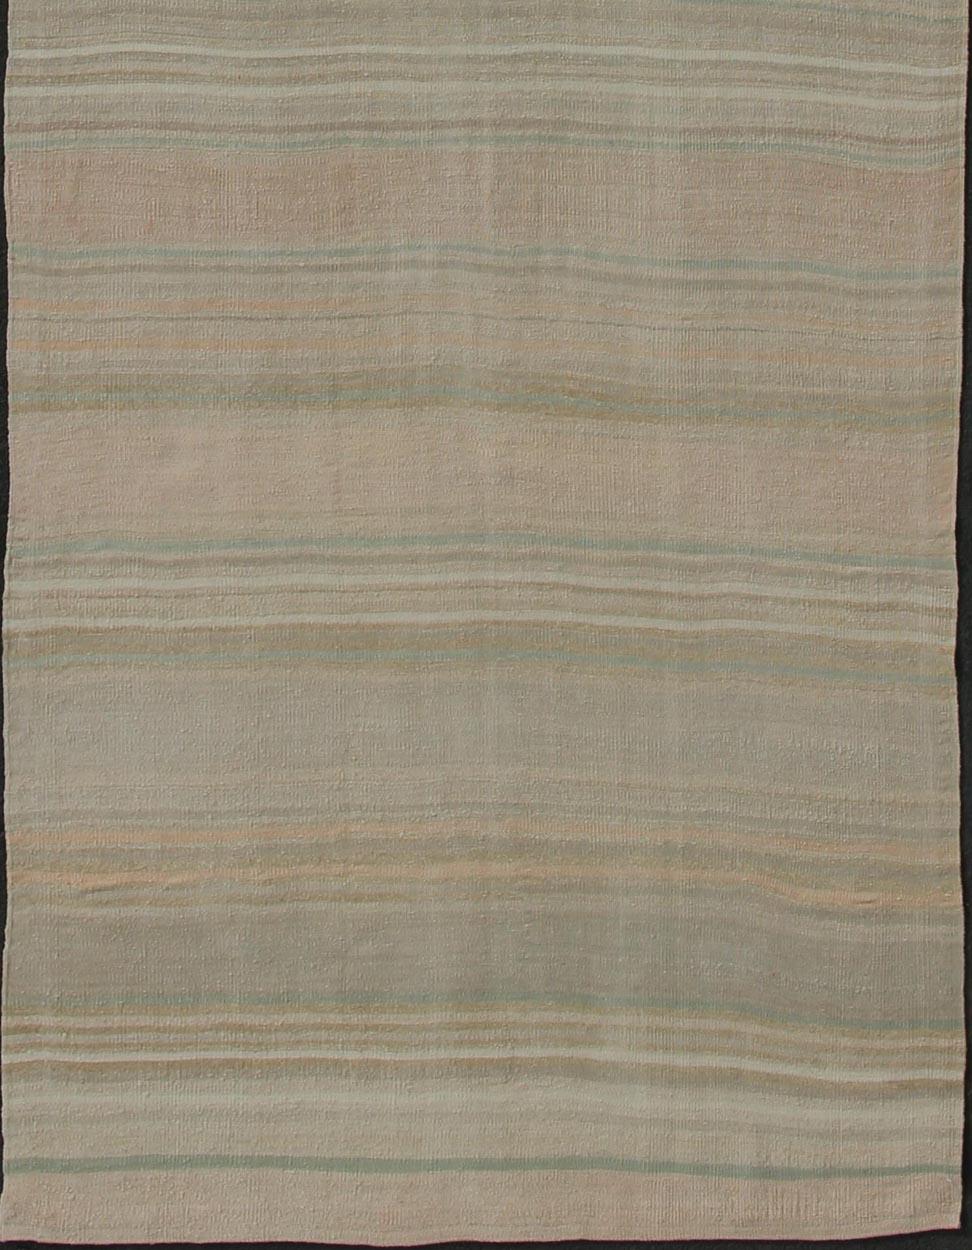 Gallery long runner Turkish vintage Kilim with horizontal stripe design, Keivan Woven Arts rug/EN-176580, country of origin / type: Iran / Kilim, circa 1950.

Measures: 4'10 x 15'10

Featuring a subtle stripe design, this unique 1950s Kilim Gallery